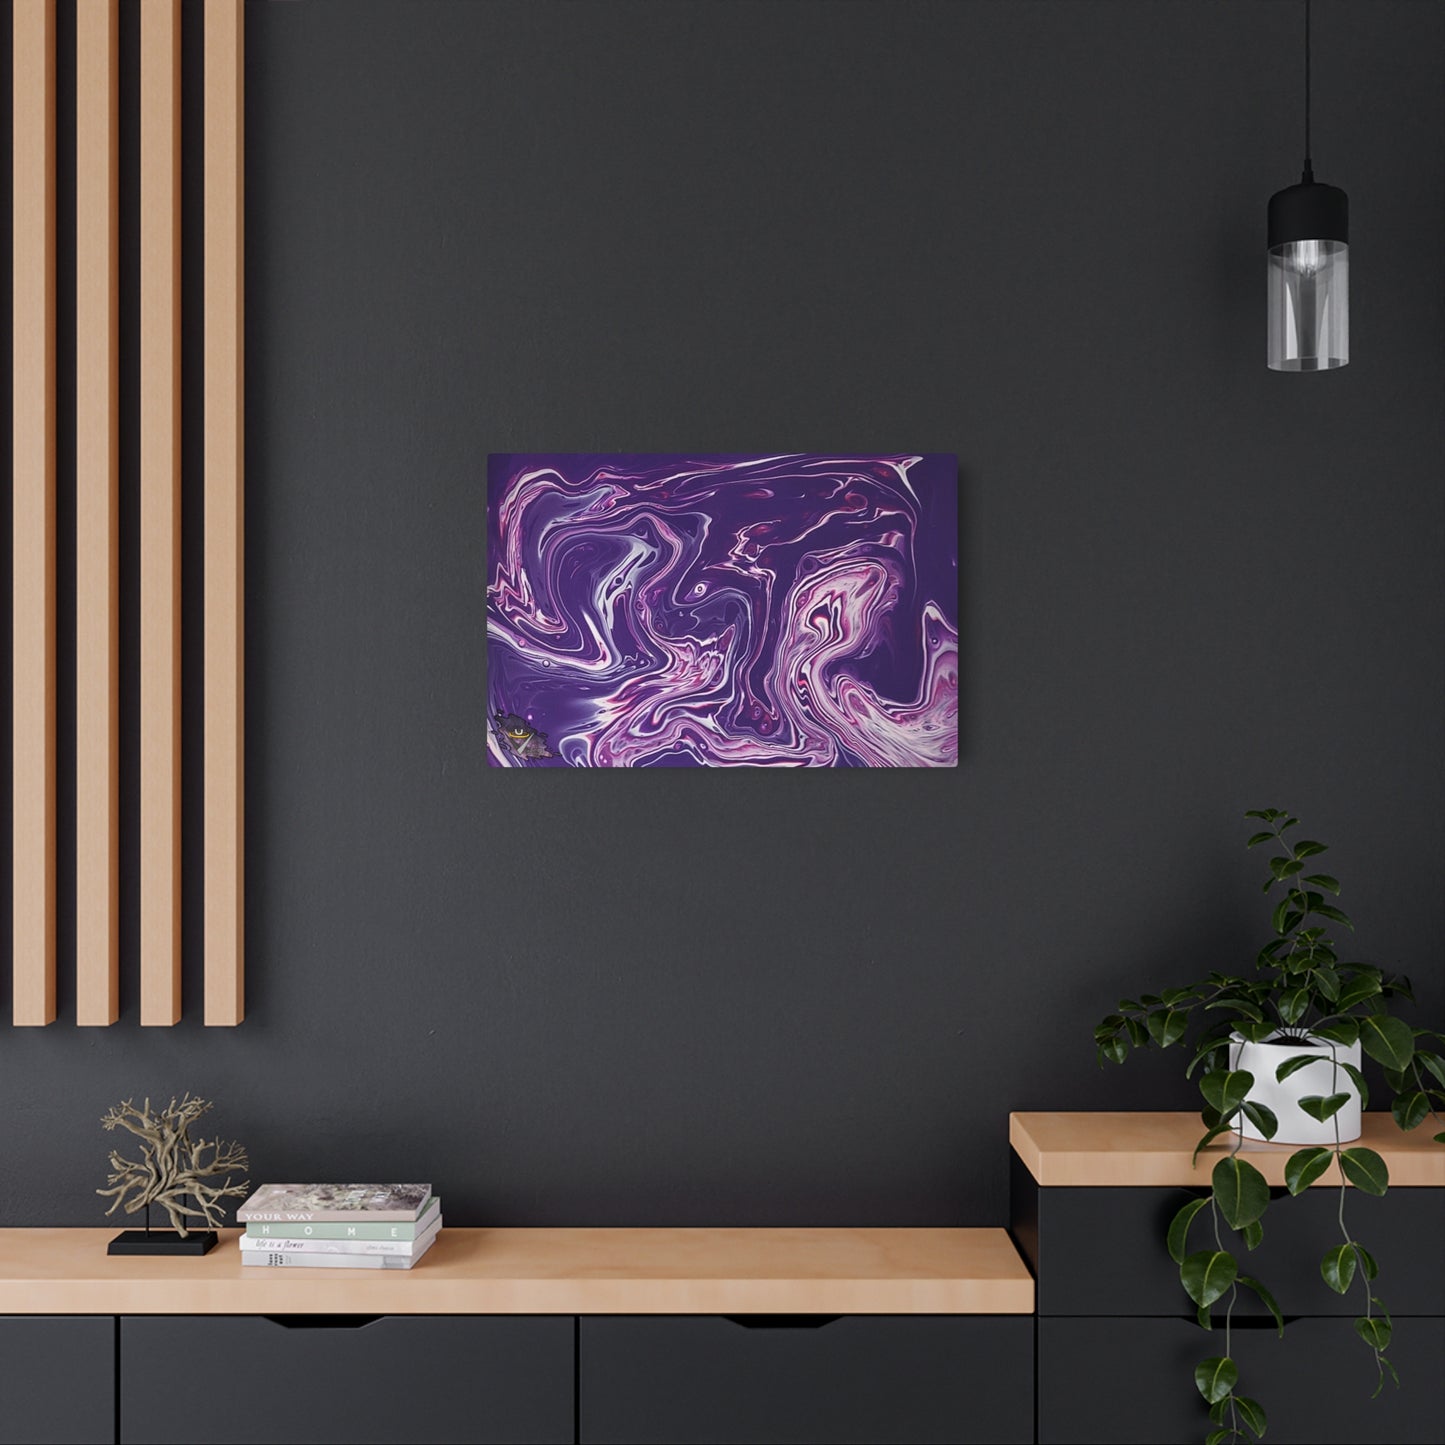 Lilac Plume Metal Art Sign